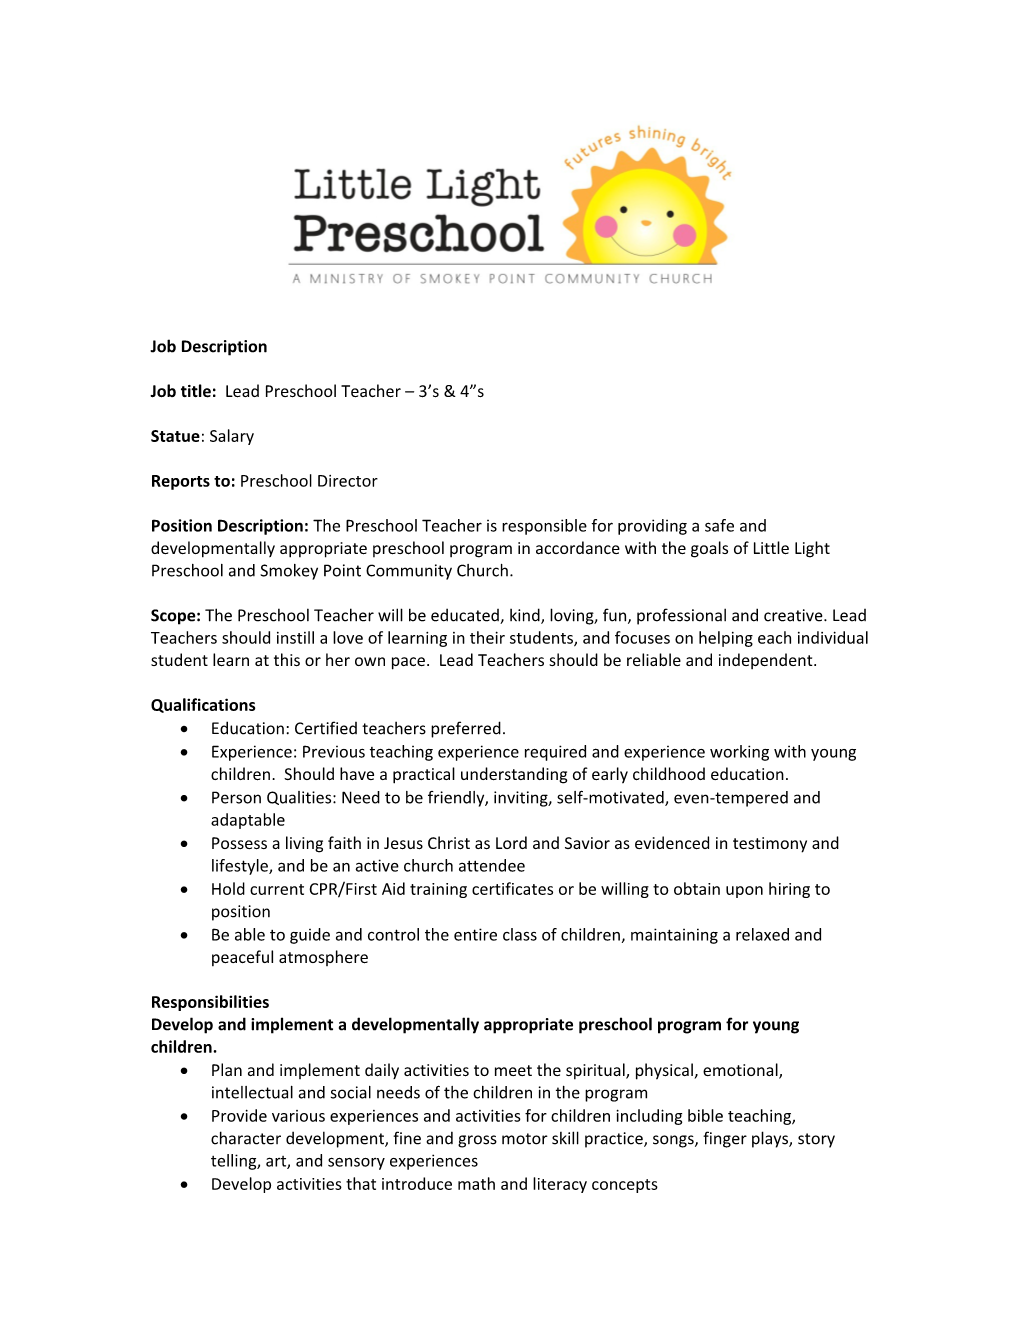 Job Title: Lead Preschool Teacher 3 S & 4 S